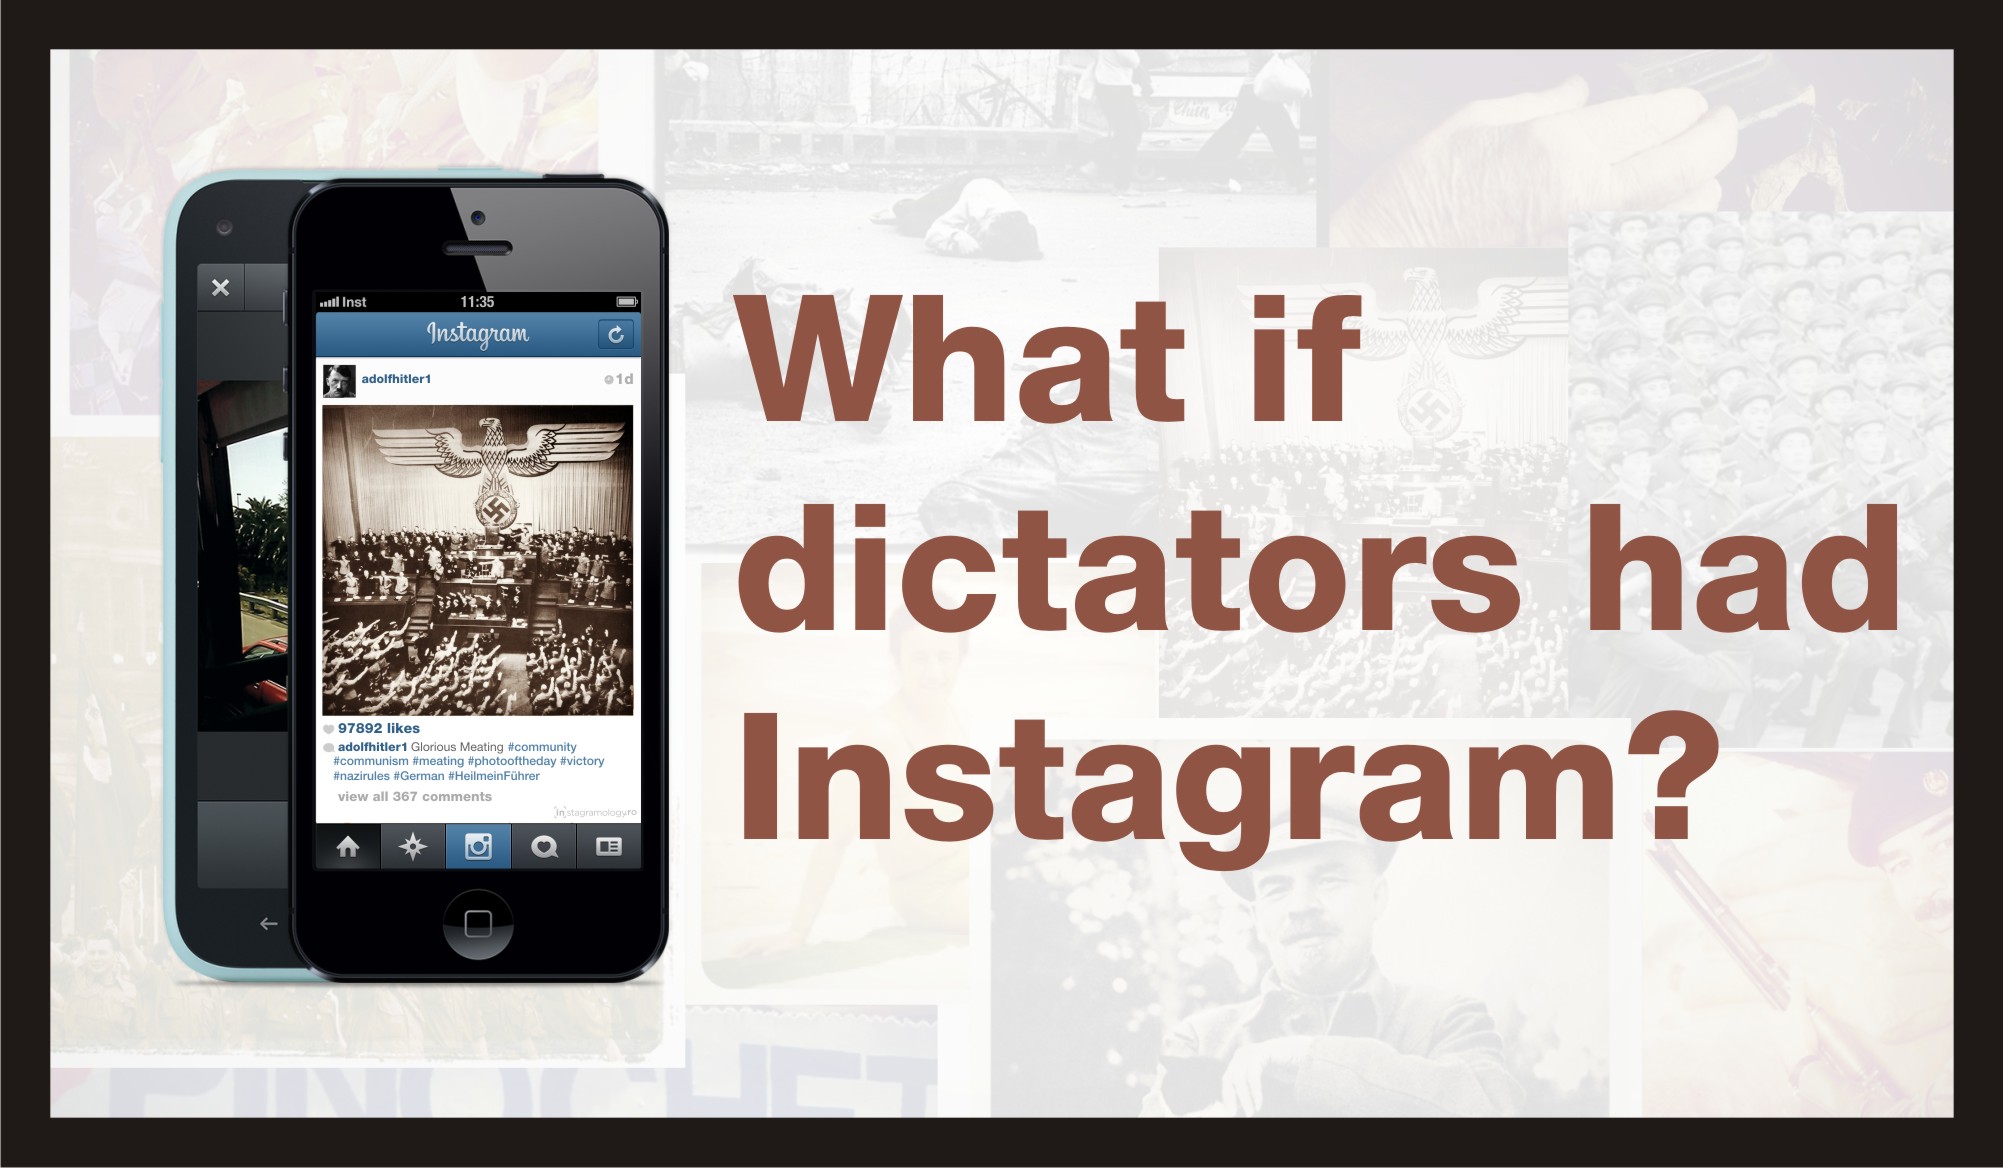 What if dictators had Instagram?